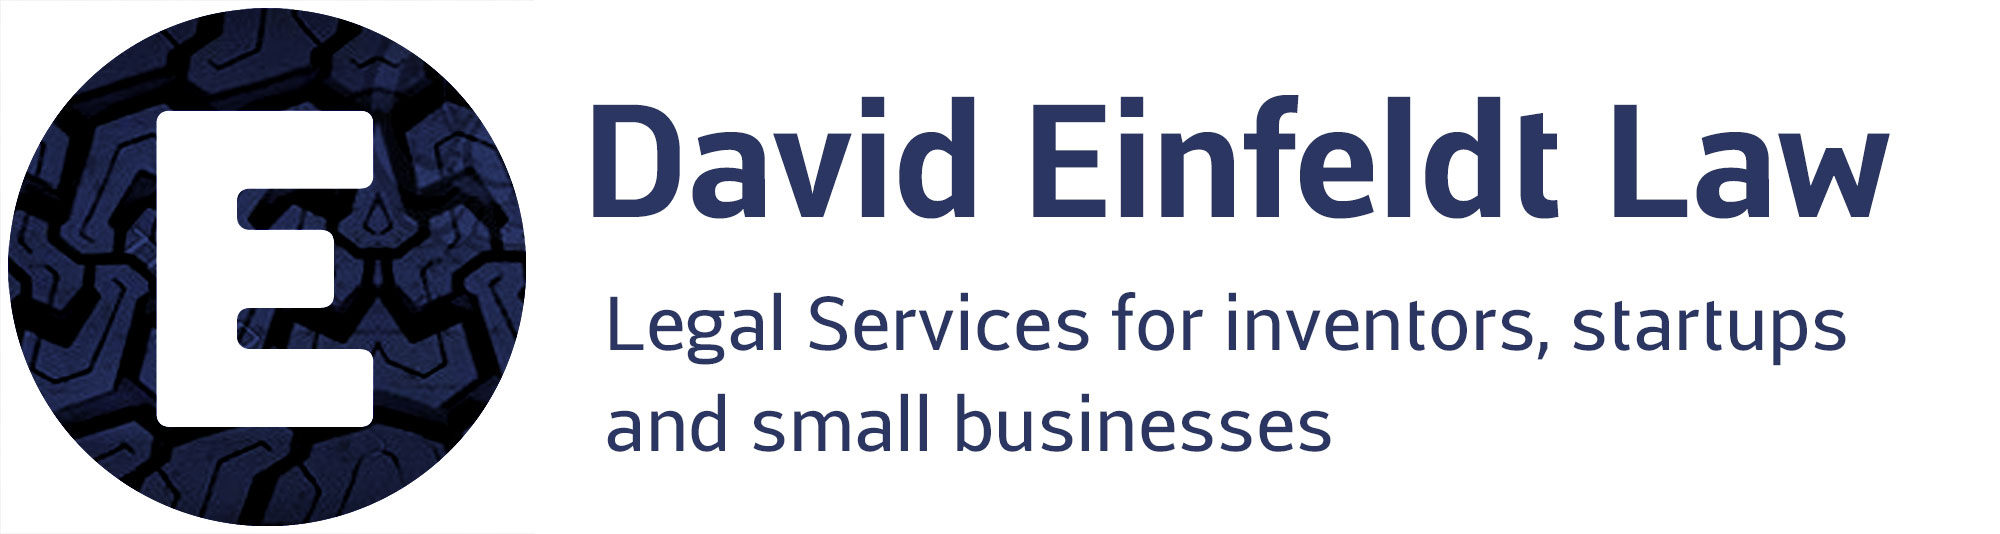 David Einfeldt Law